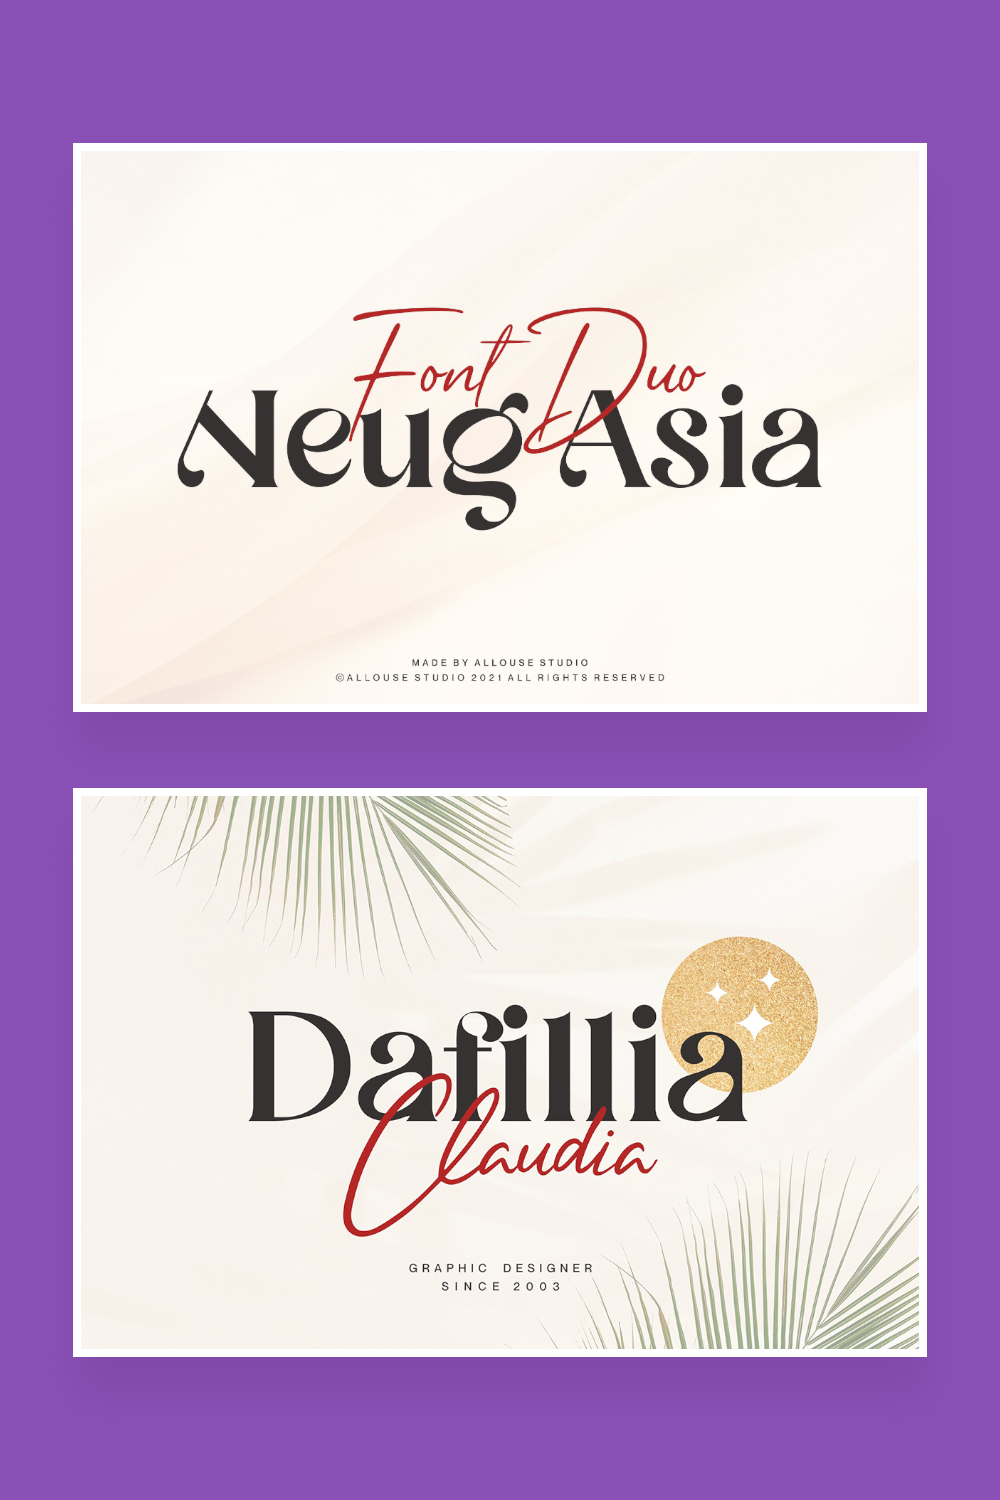 neug asia beautiful two styles font pinterest image.